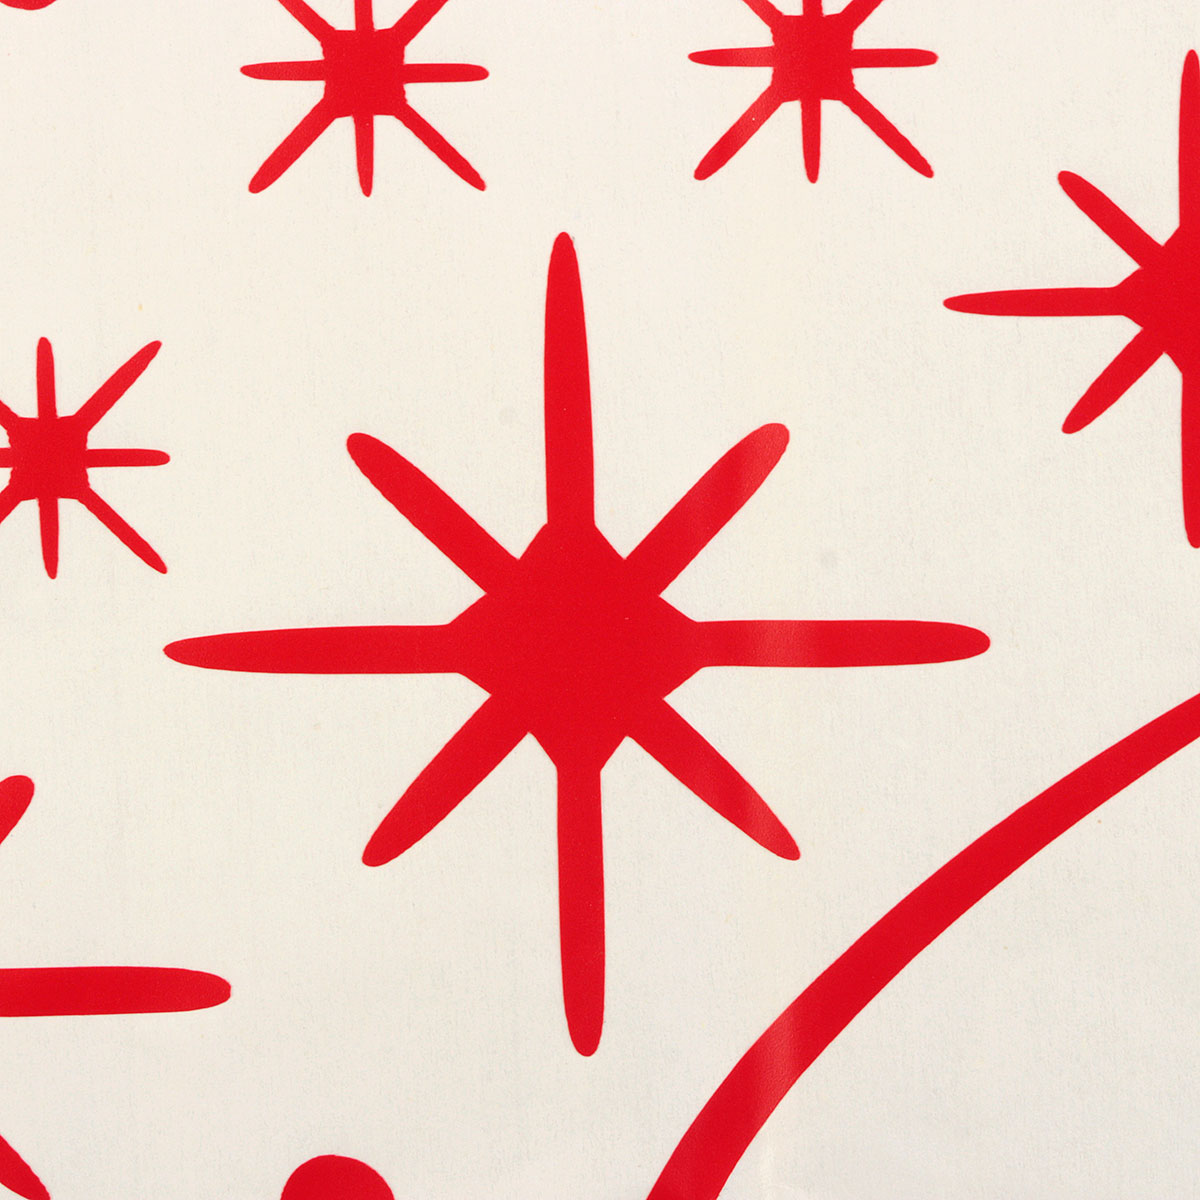 Merry-Christmas-Snowflake-Window-Wall-Sticker-Wall-Window-Decoration-1004664-8